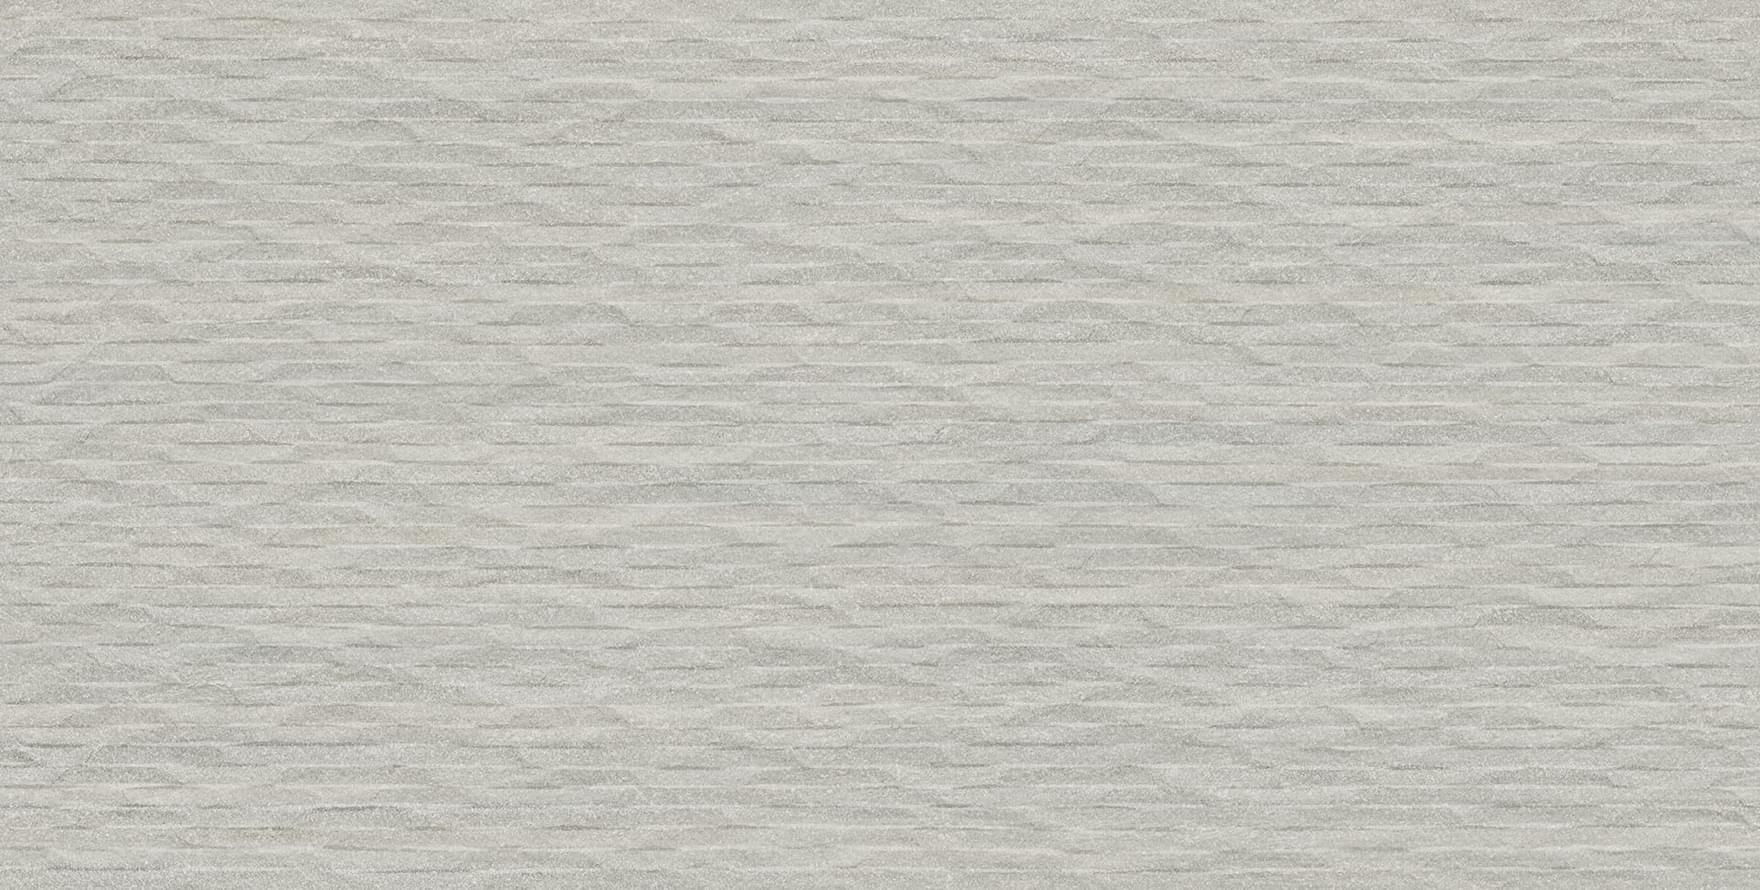 Ergon Elegance Pro Mural Grey Naturale 60x120